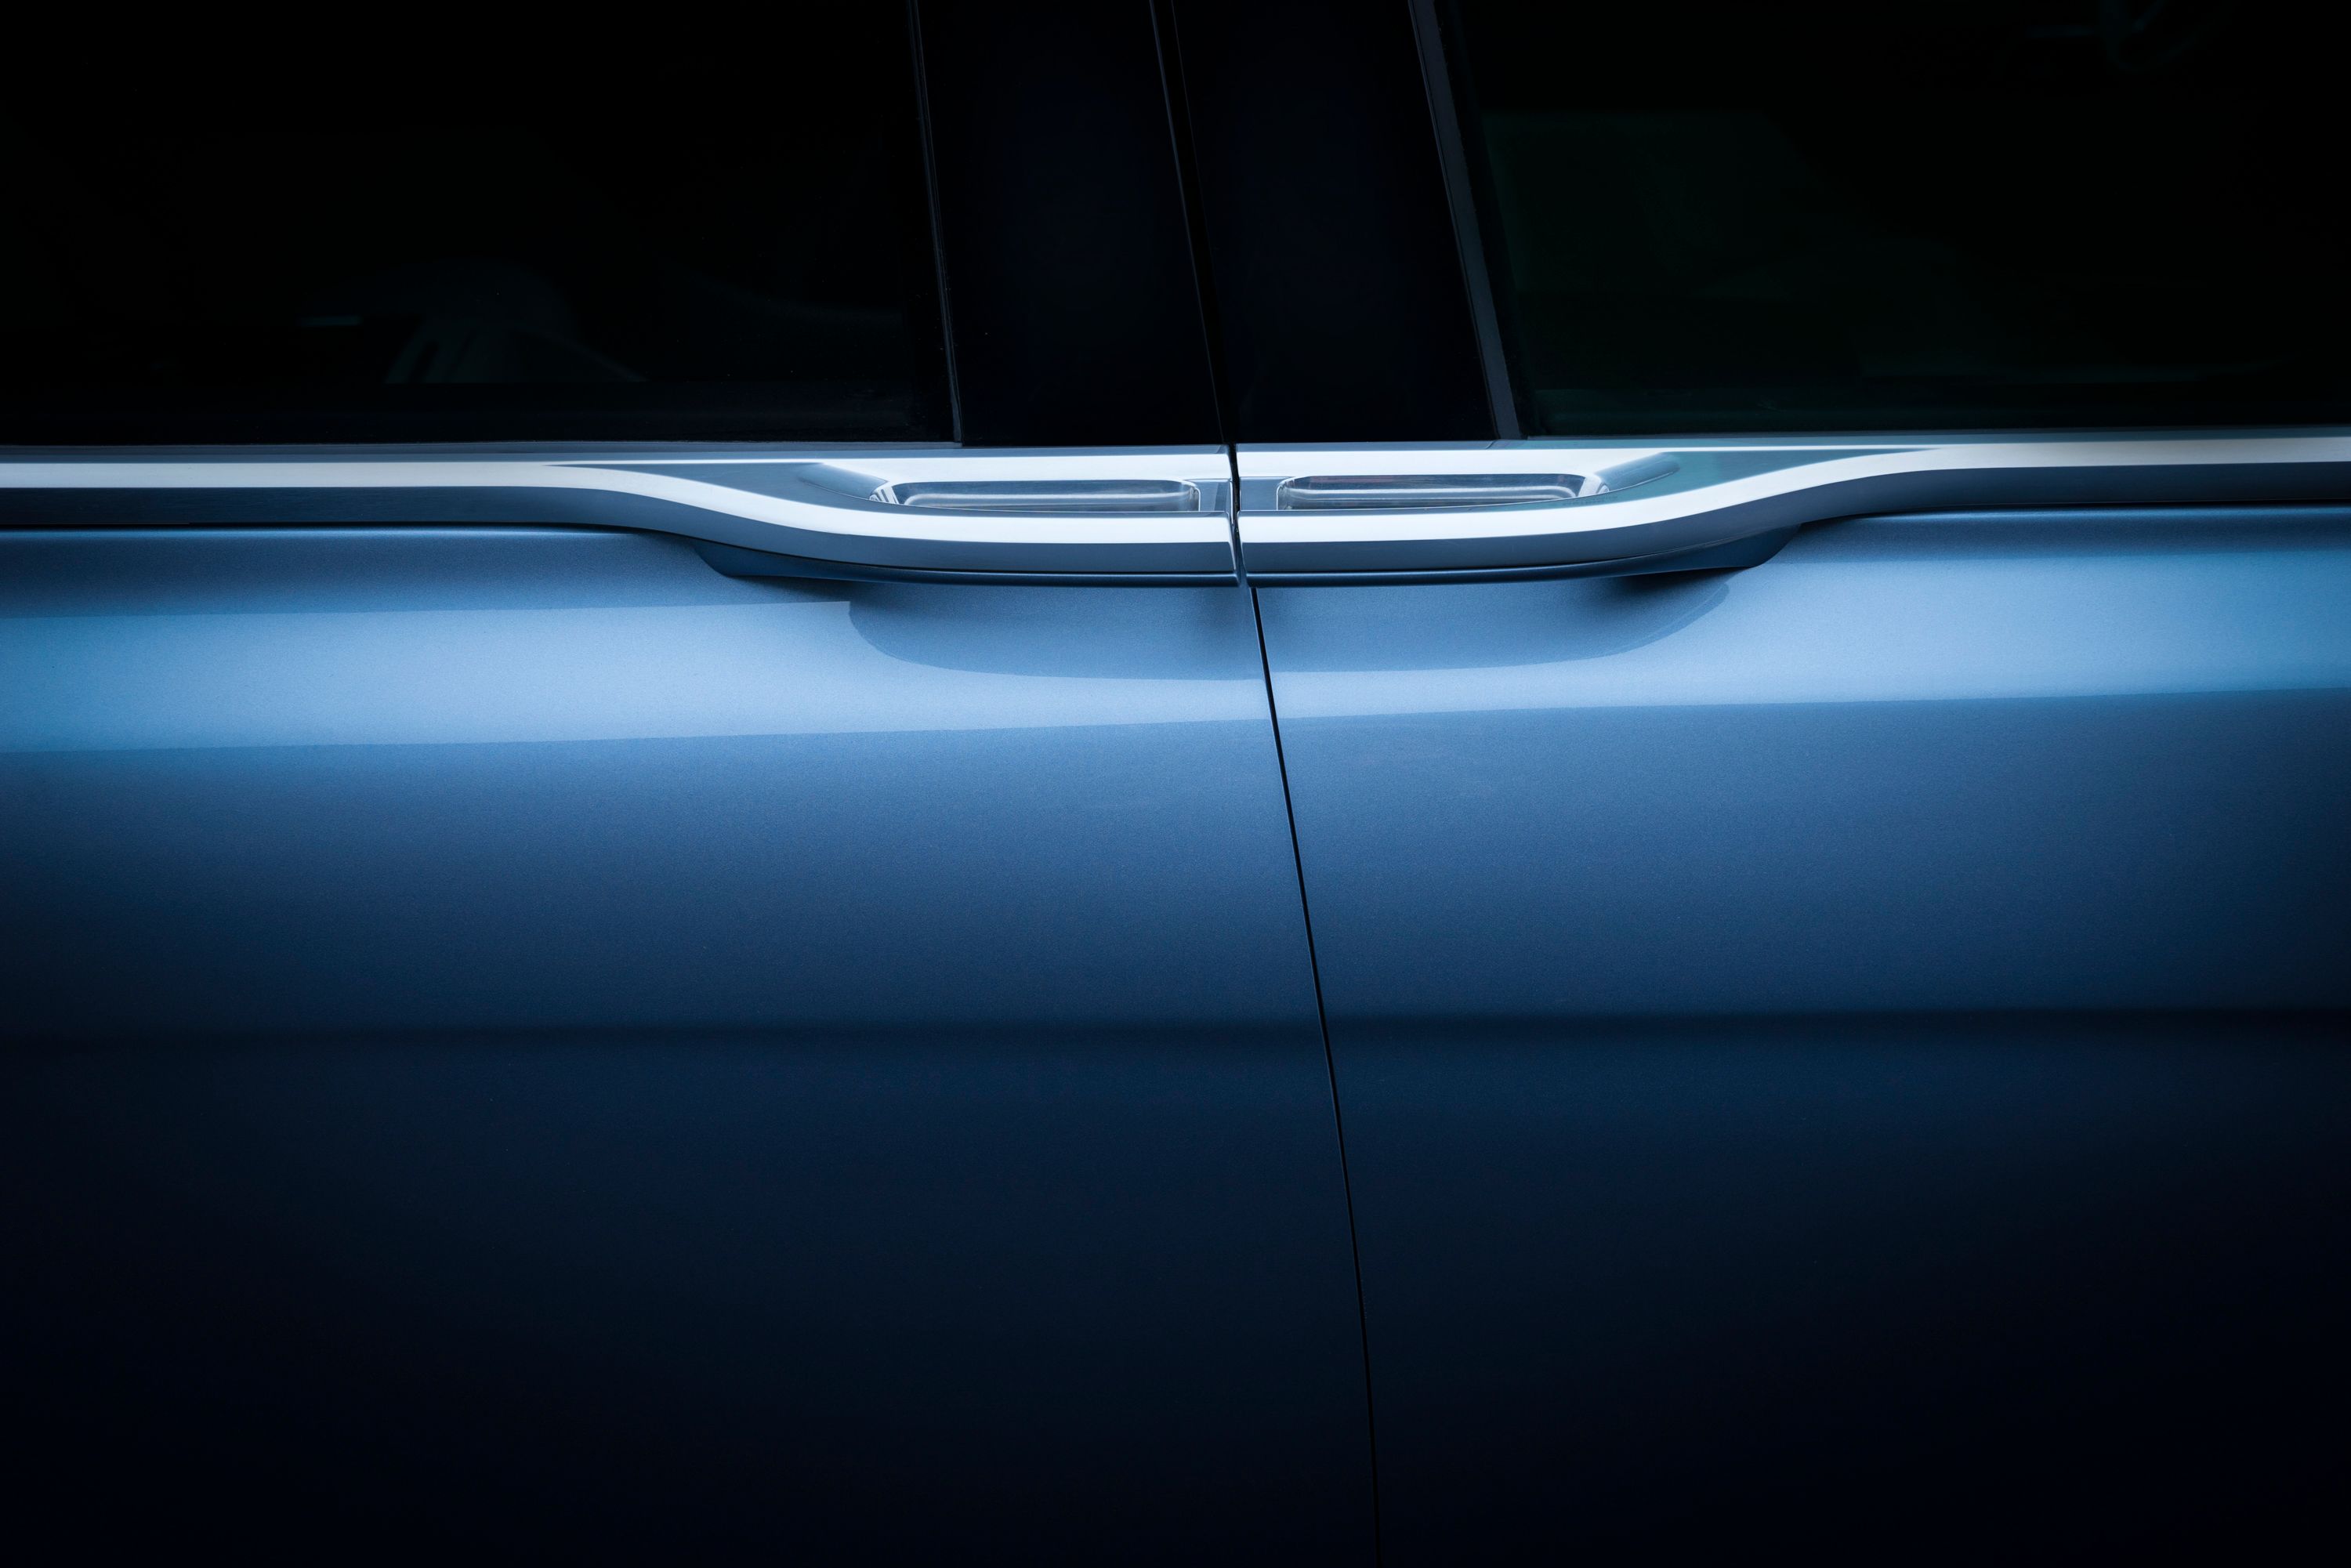 2020 Lincoln Continental Coach Door Edition